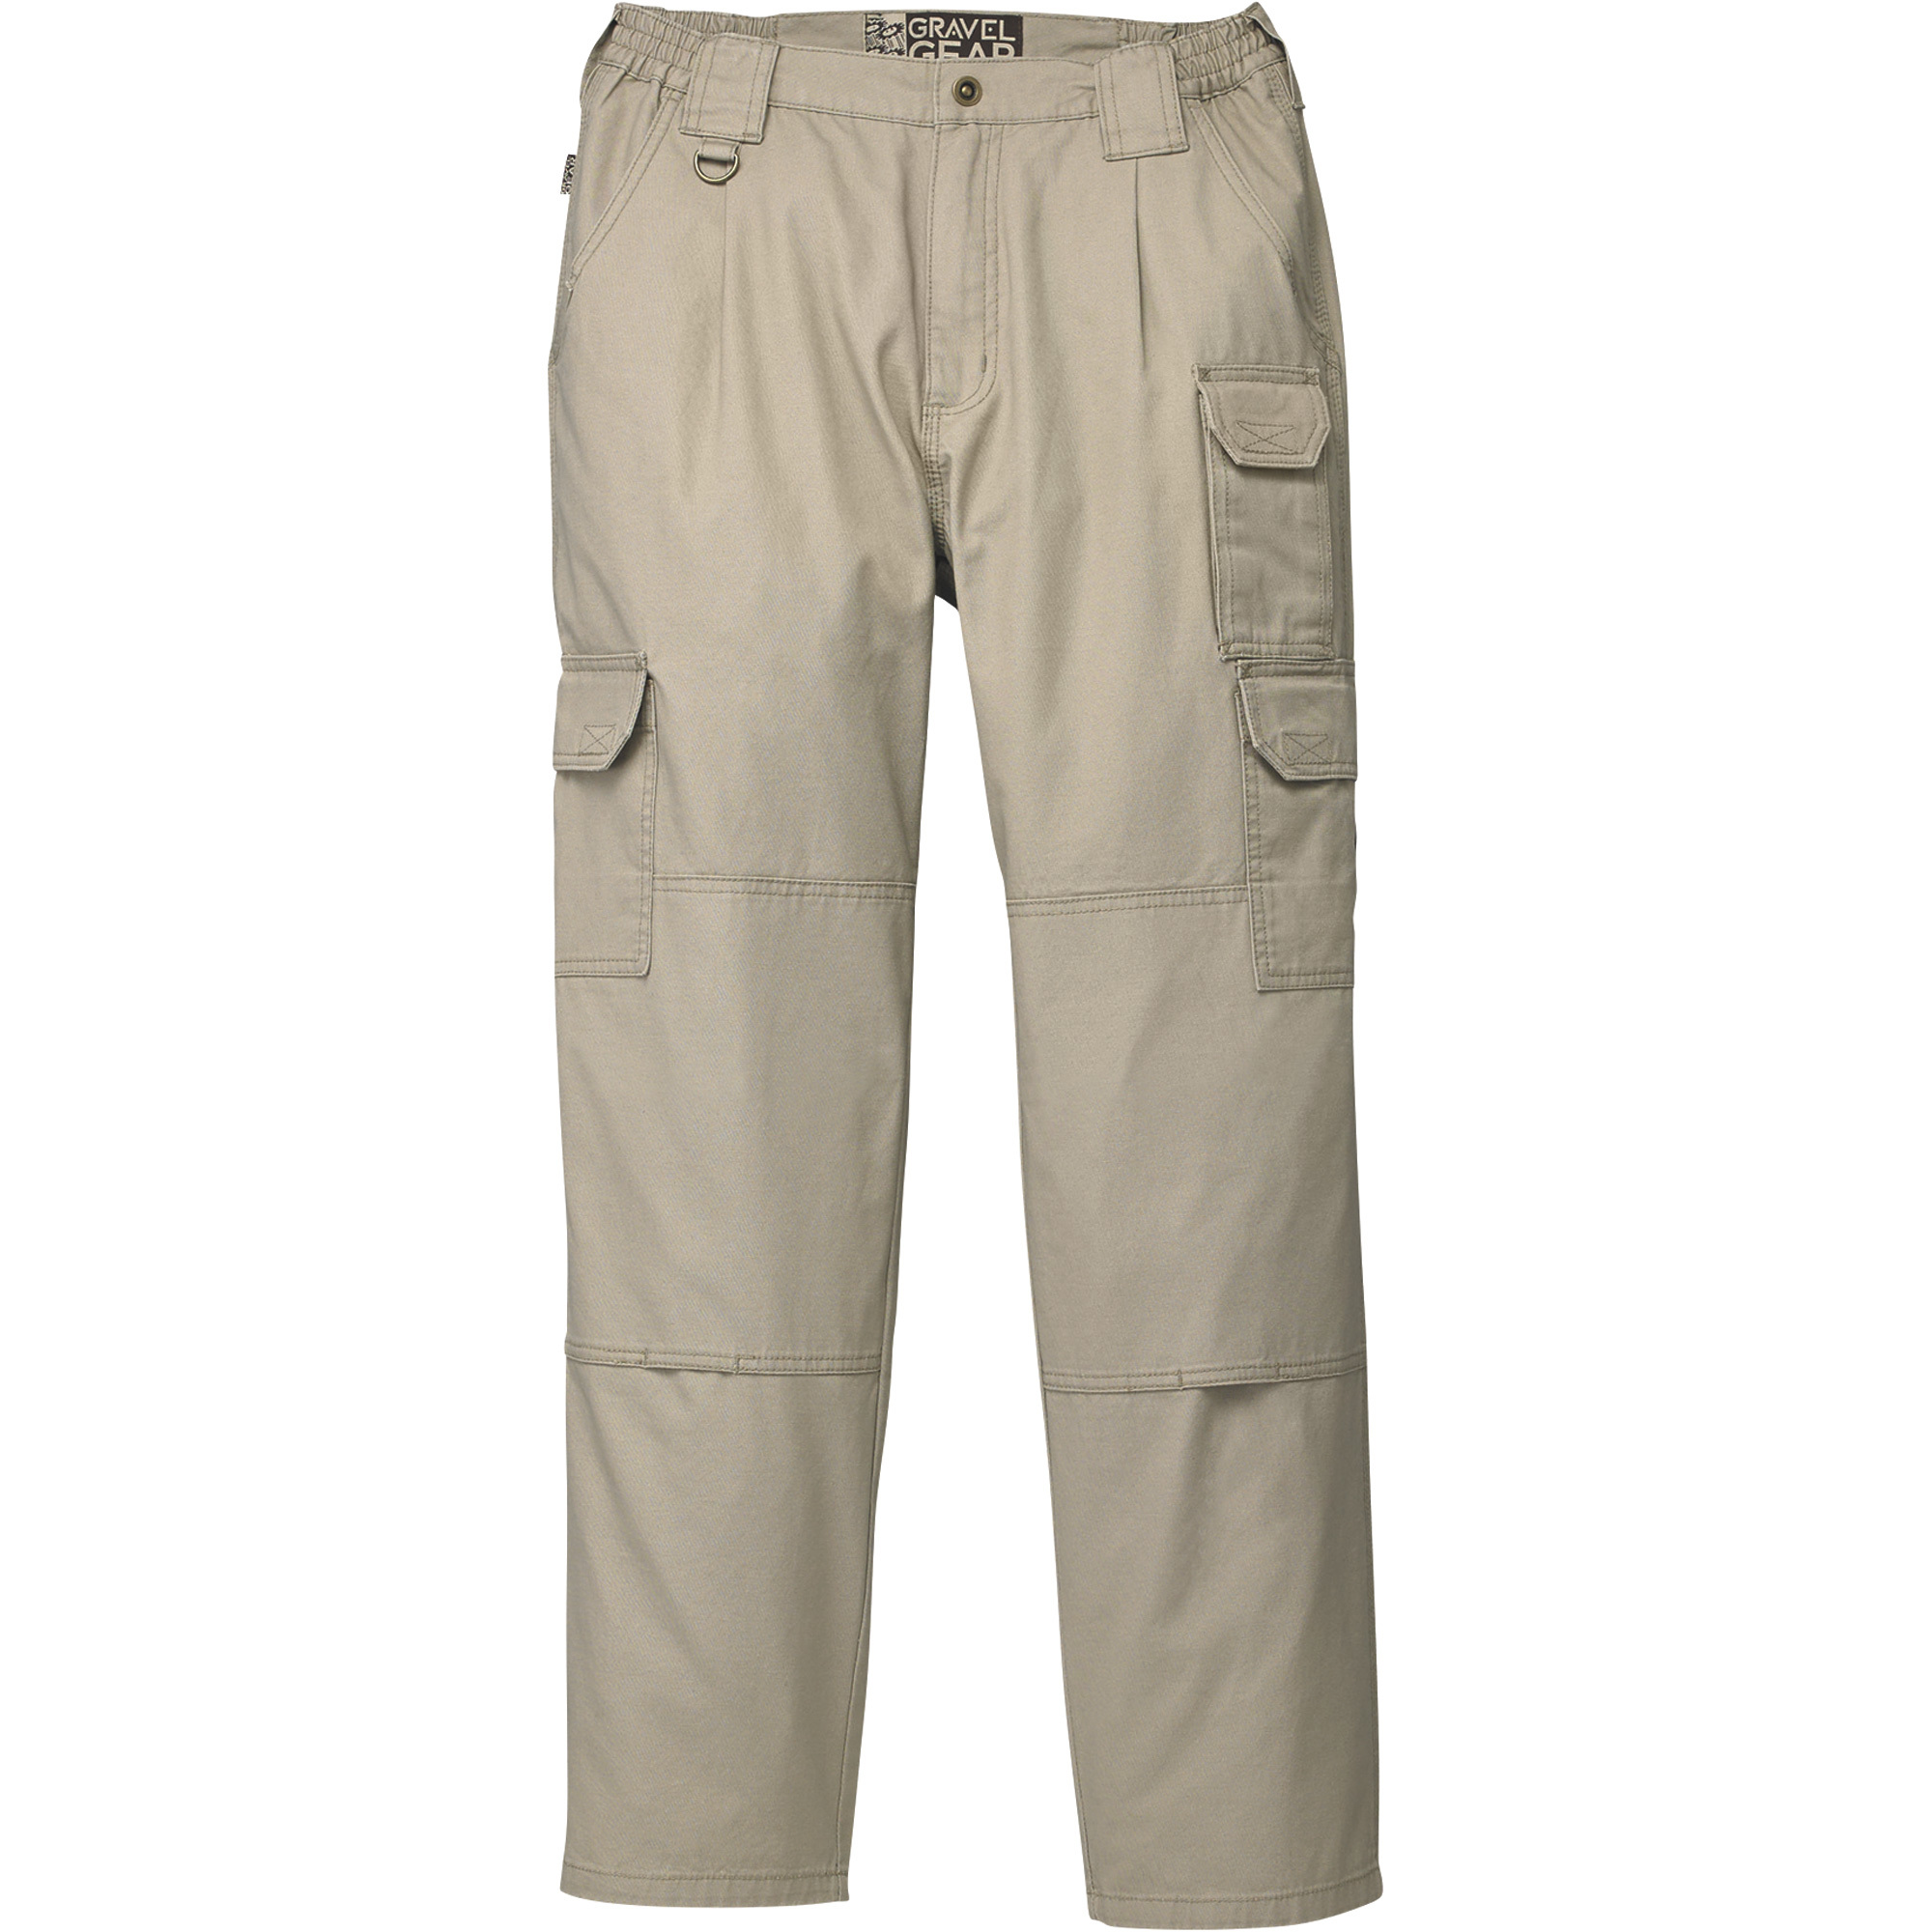 Gravel Gear Men's 7-Pocket Tactical Pants with Teflon - Khaki, 36Inch Waist x 34Inch Inseam